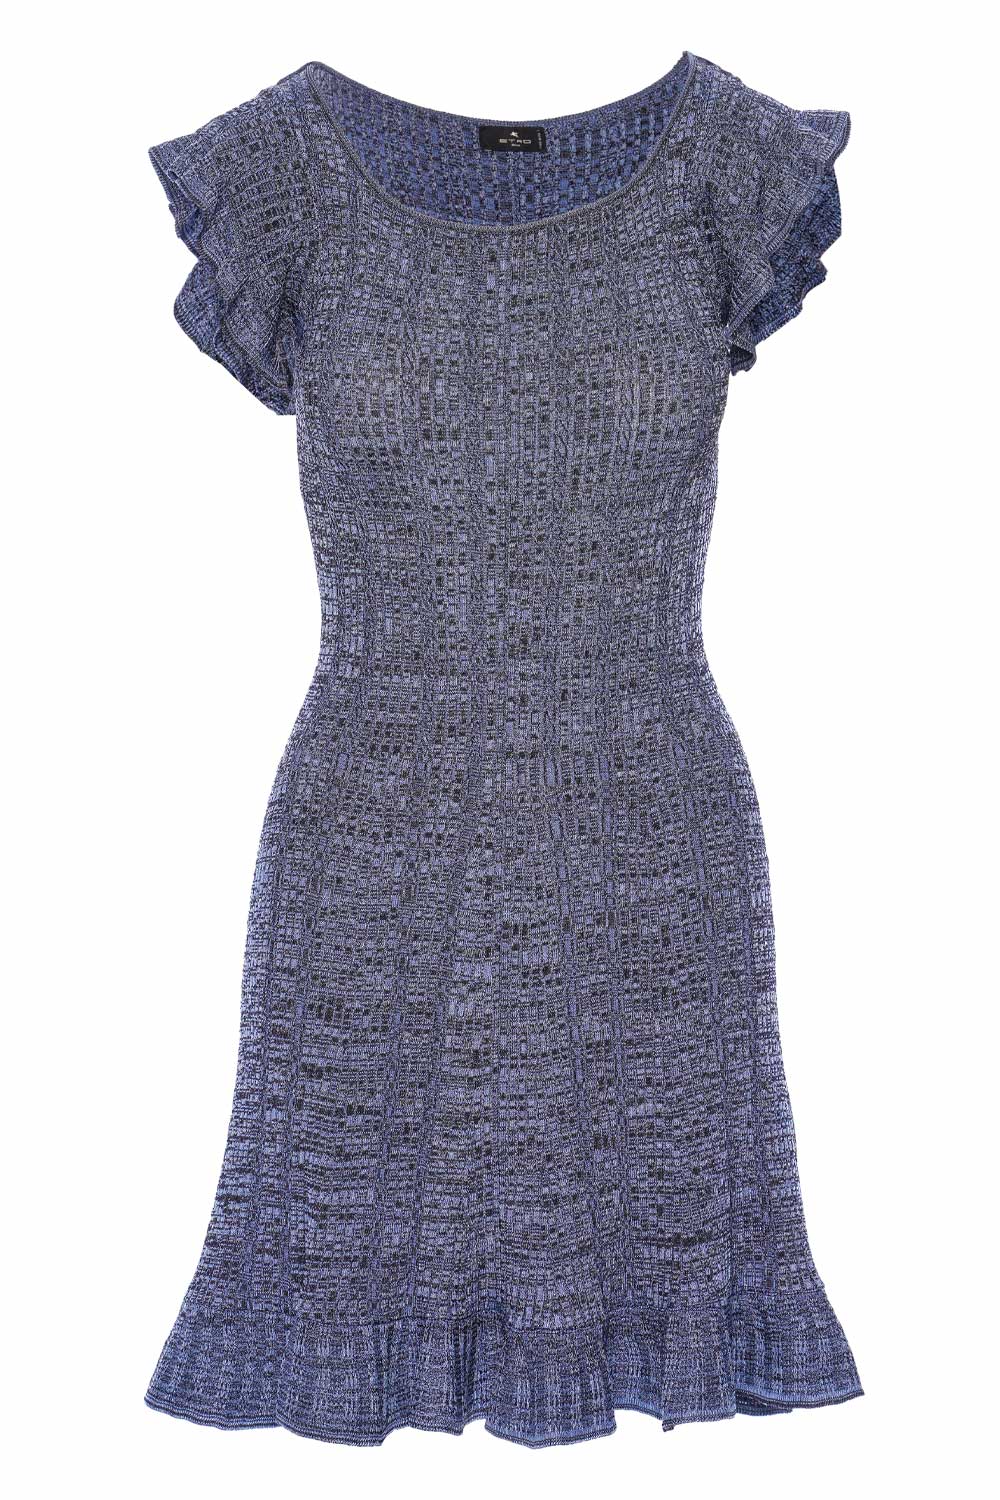 Etro Blue Ruffled Knit Mini Dress